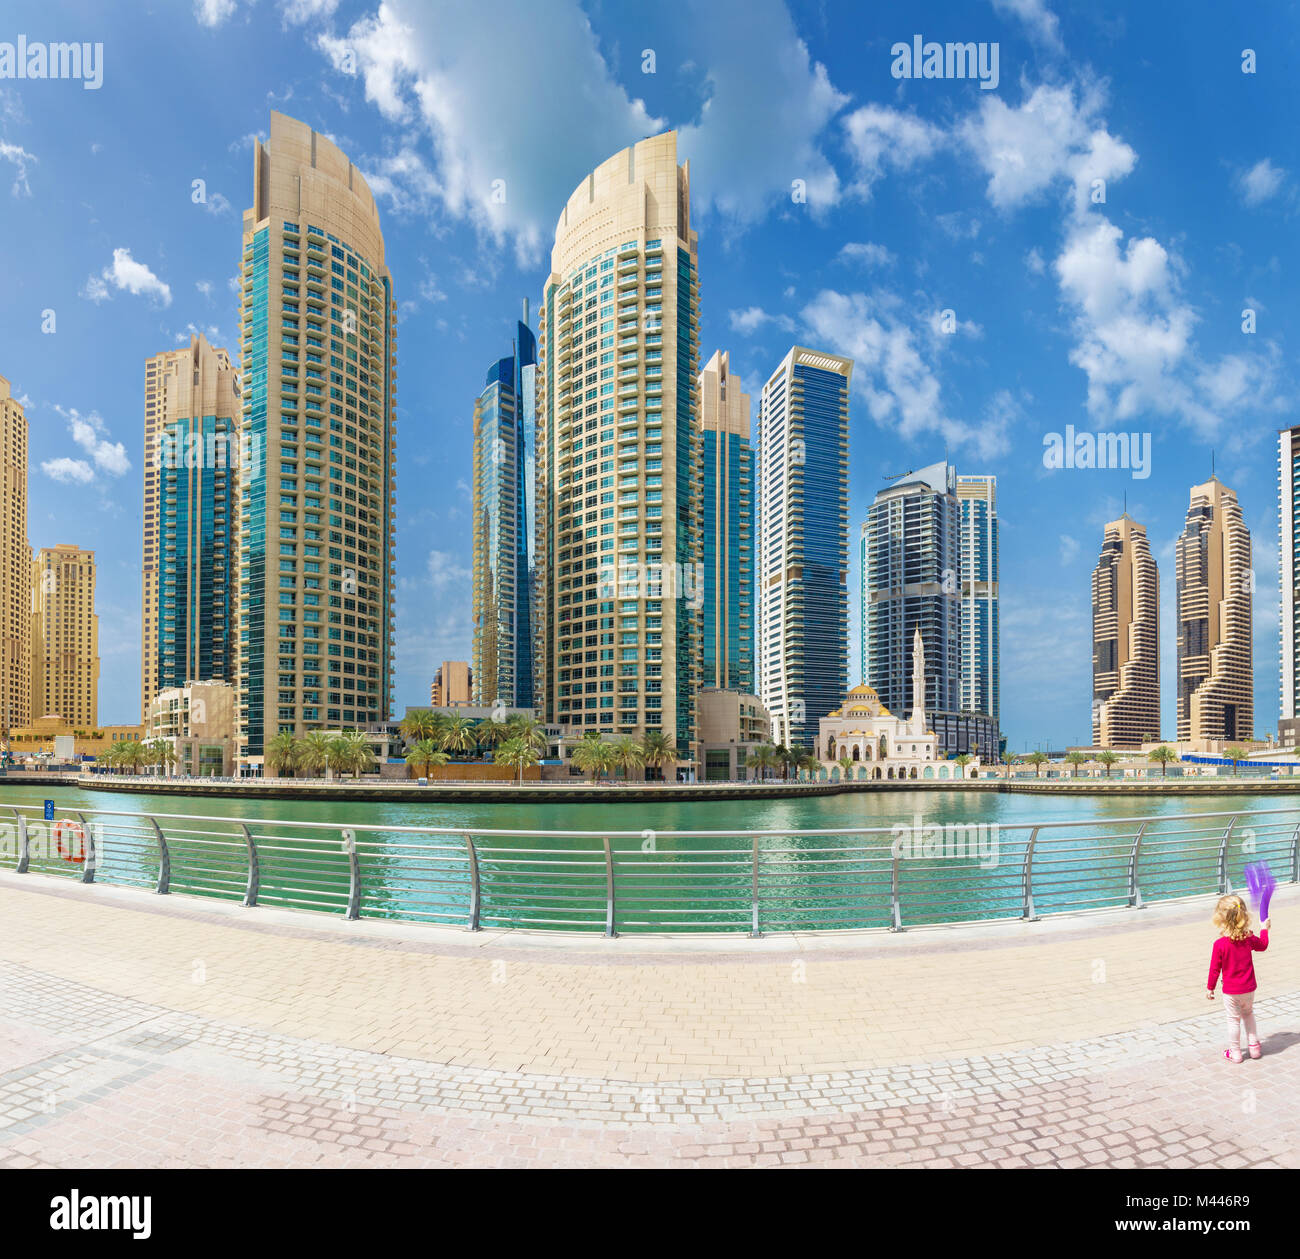 Dubai - The skyscrapers and hotels of Marina and the promenade. Stock Photo